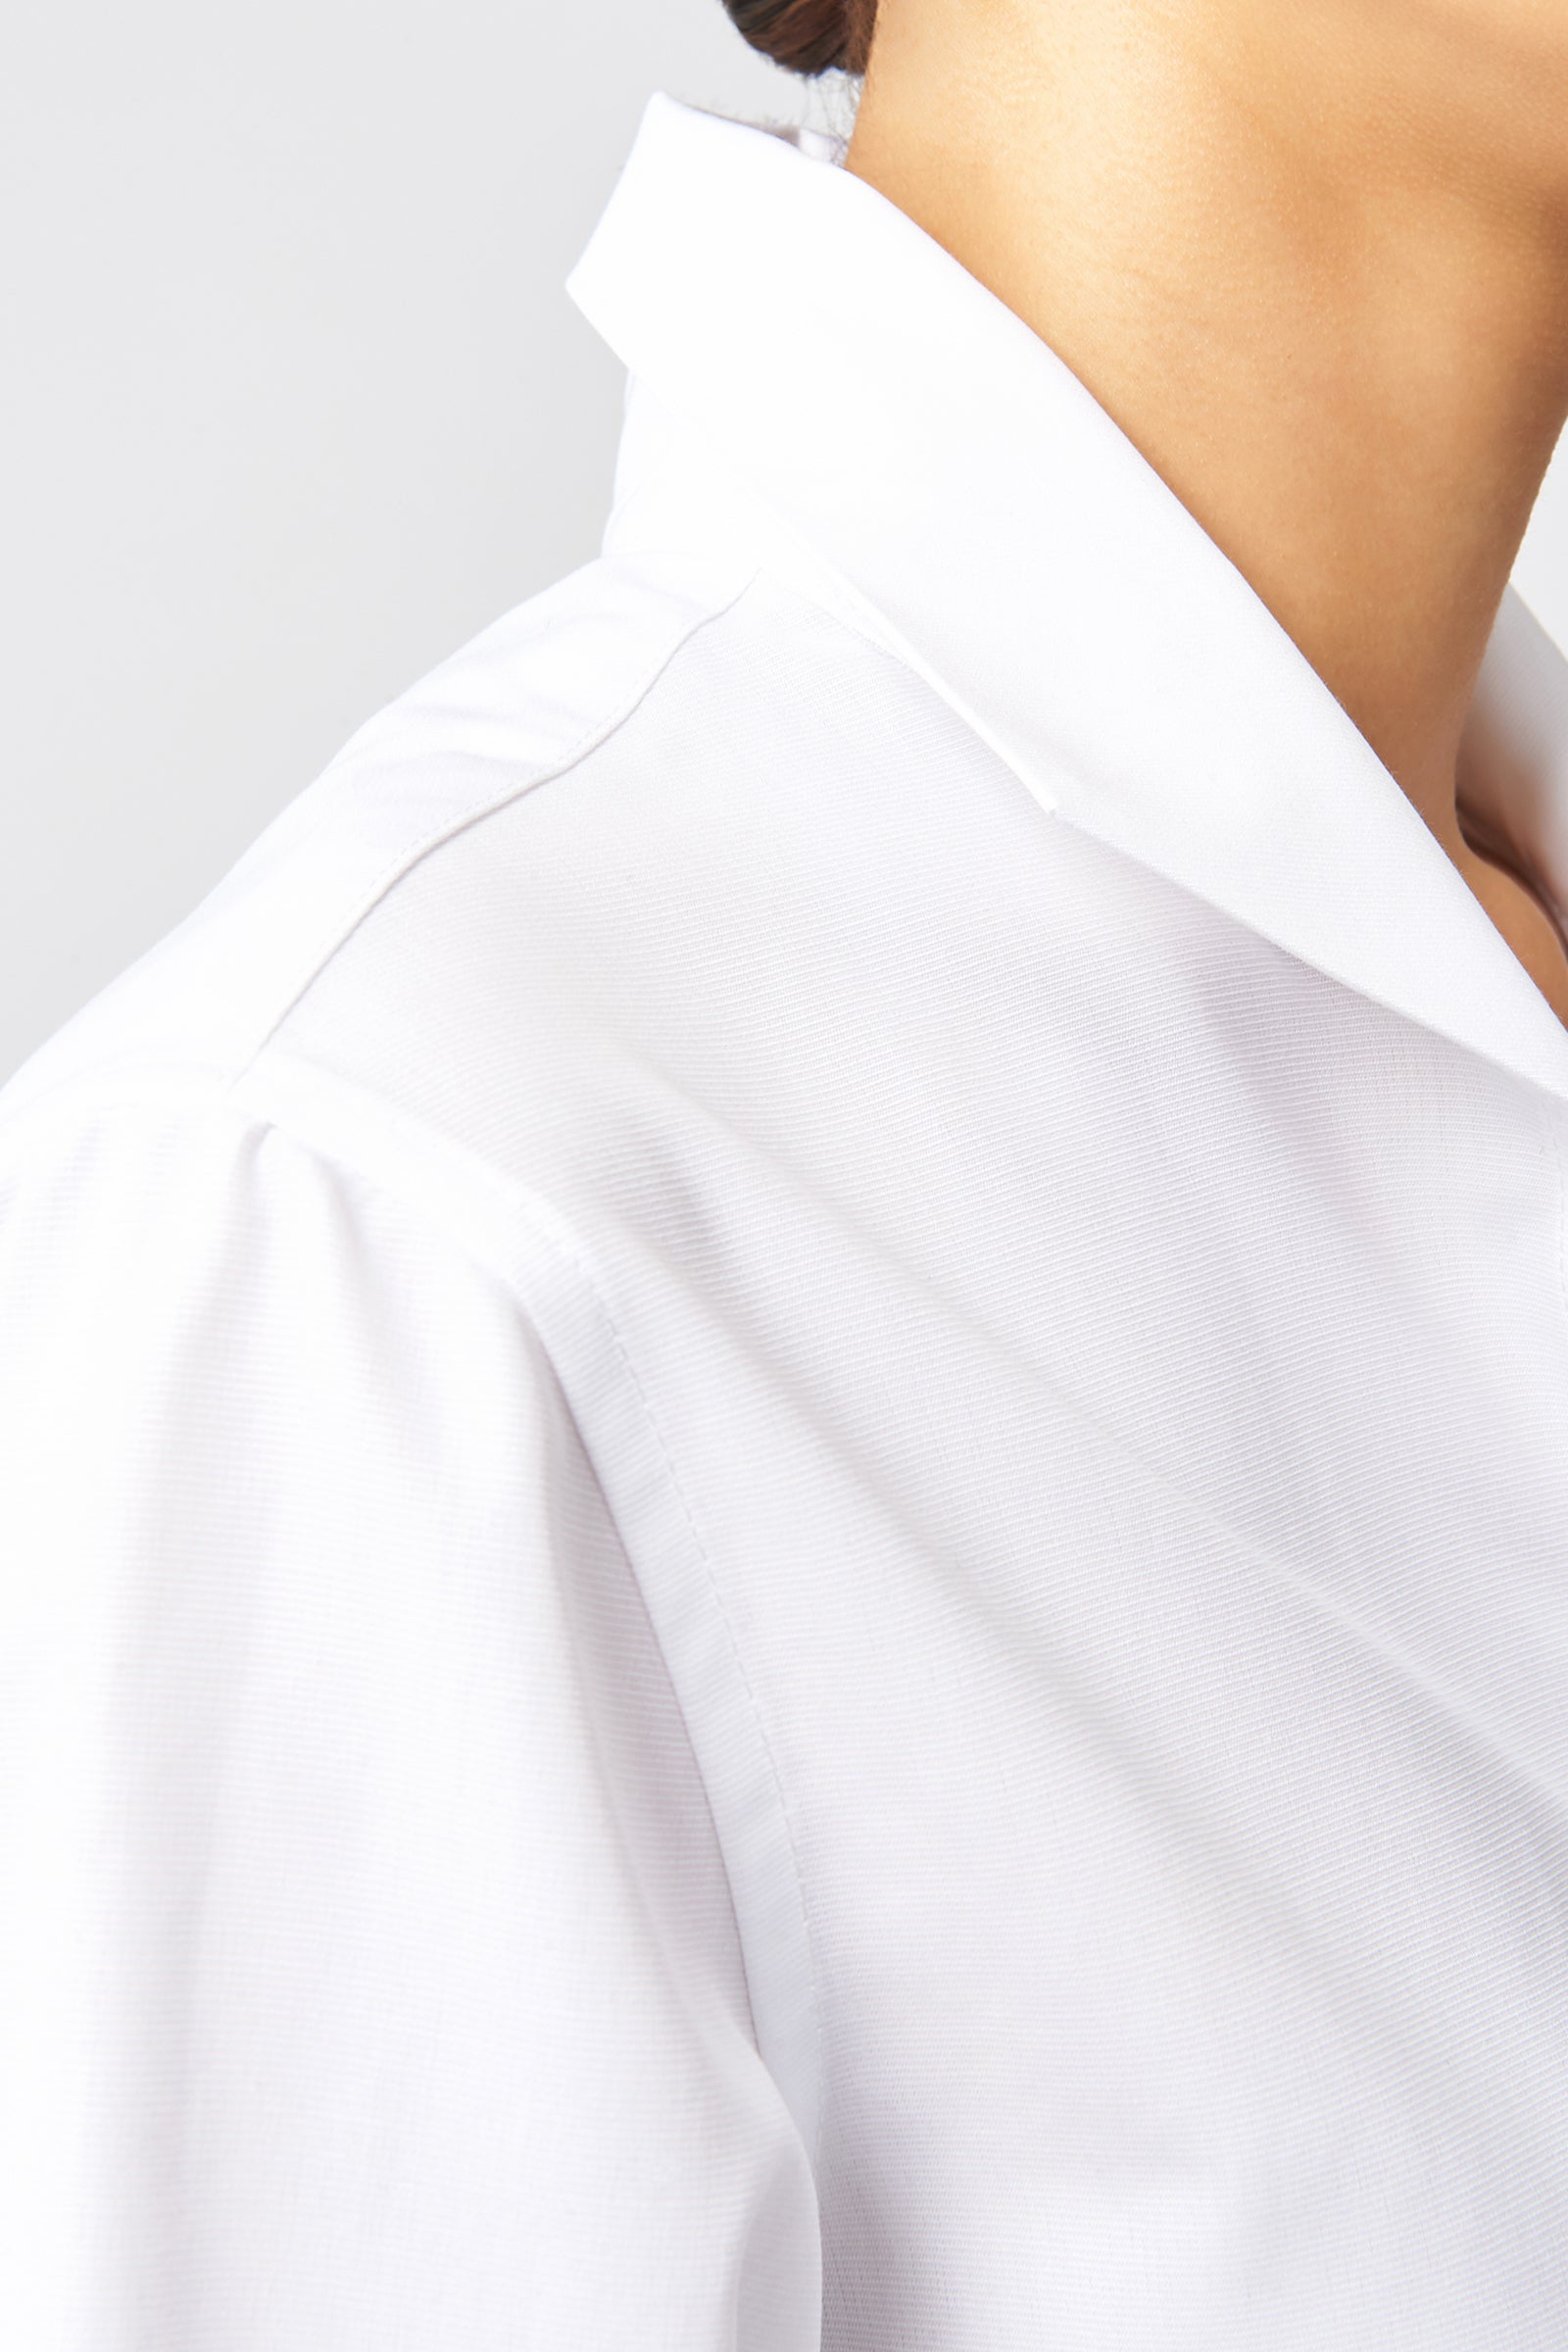 Kal Rieman Ginna Box Pleat Shirt in White Ottoman on Model Front Detail View